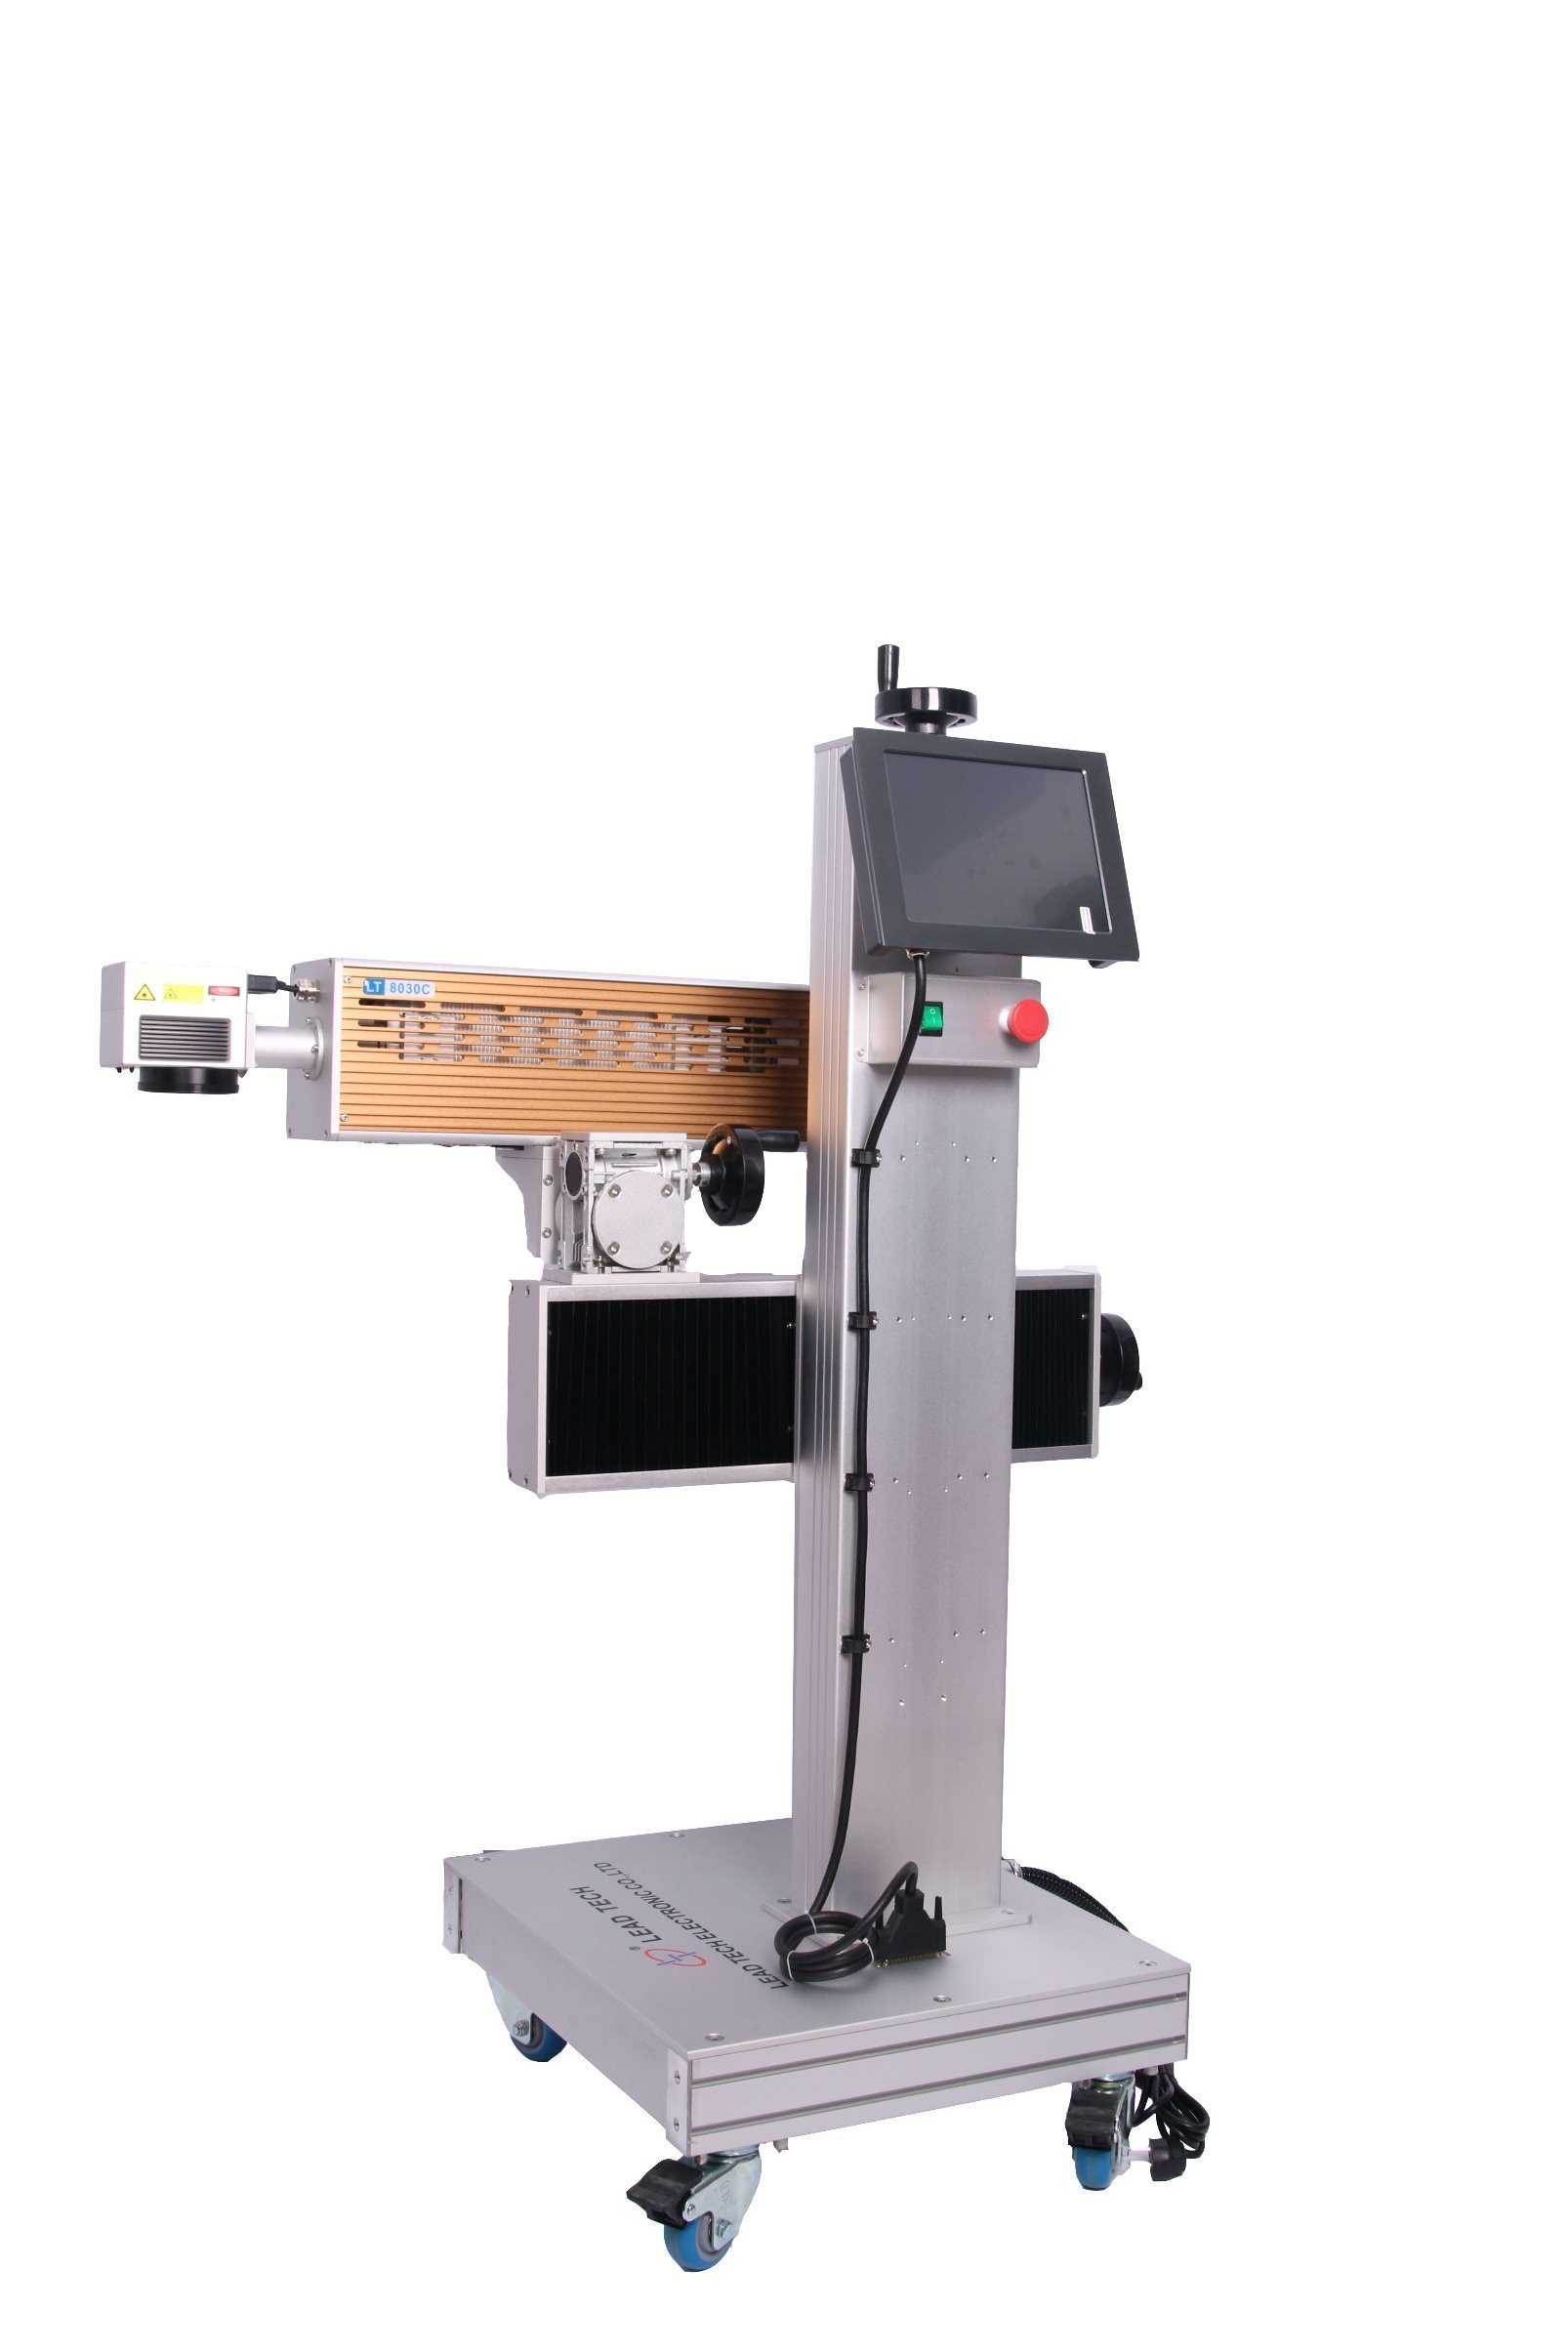 Lt8015c/Lt8030c CO2 High Performance Economic PVC Pipes Laser Marking Printer